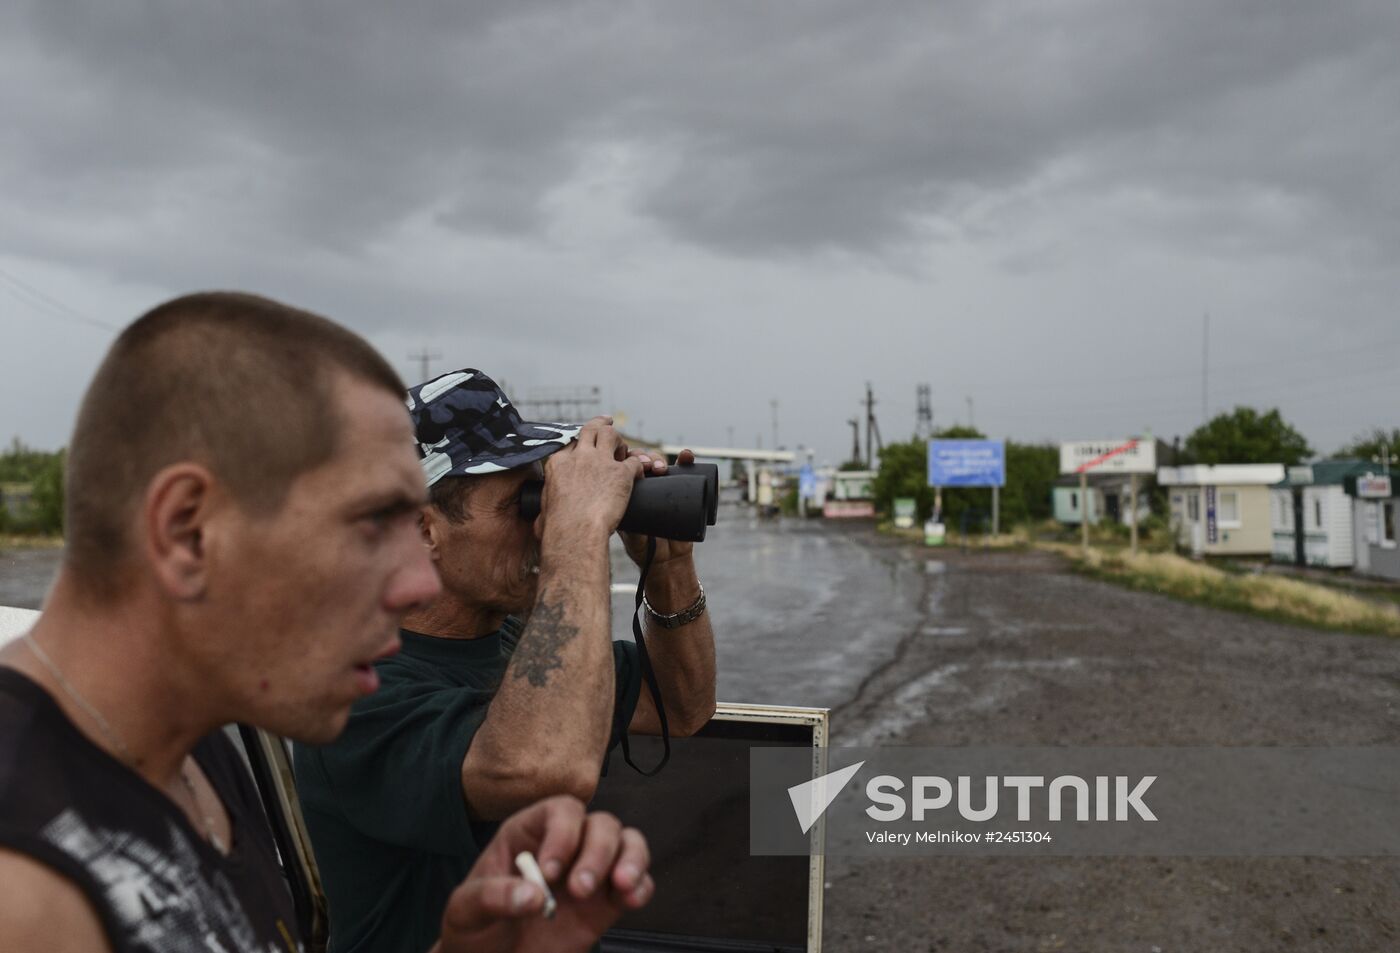 Izvarino border crossing point after shelling